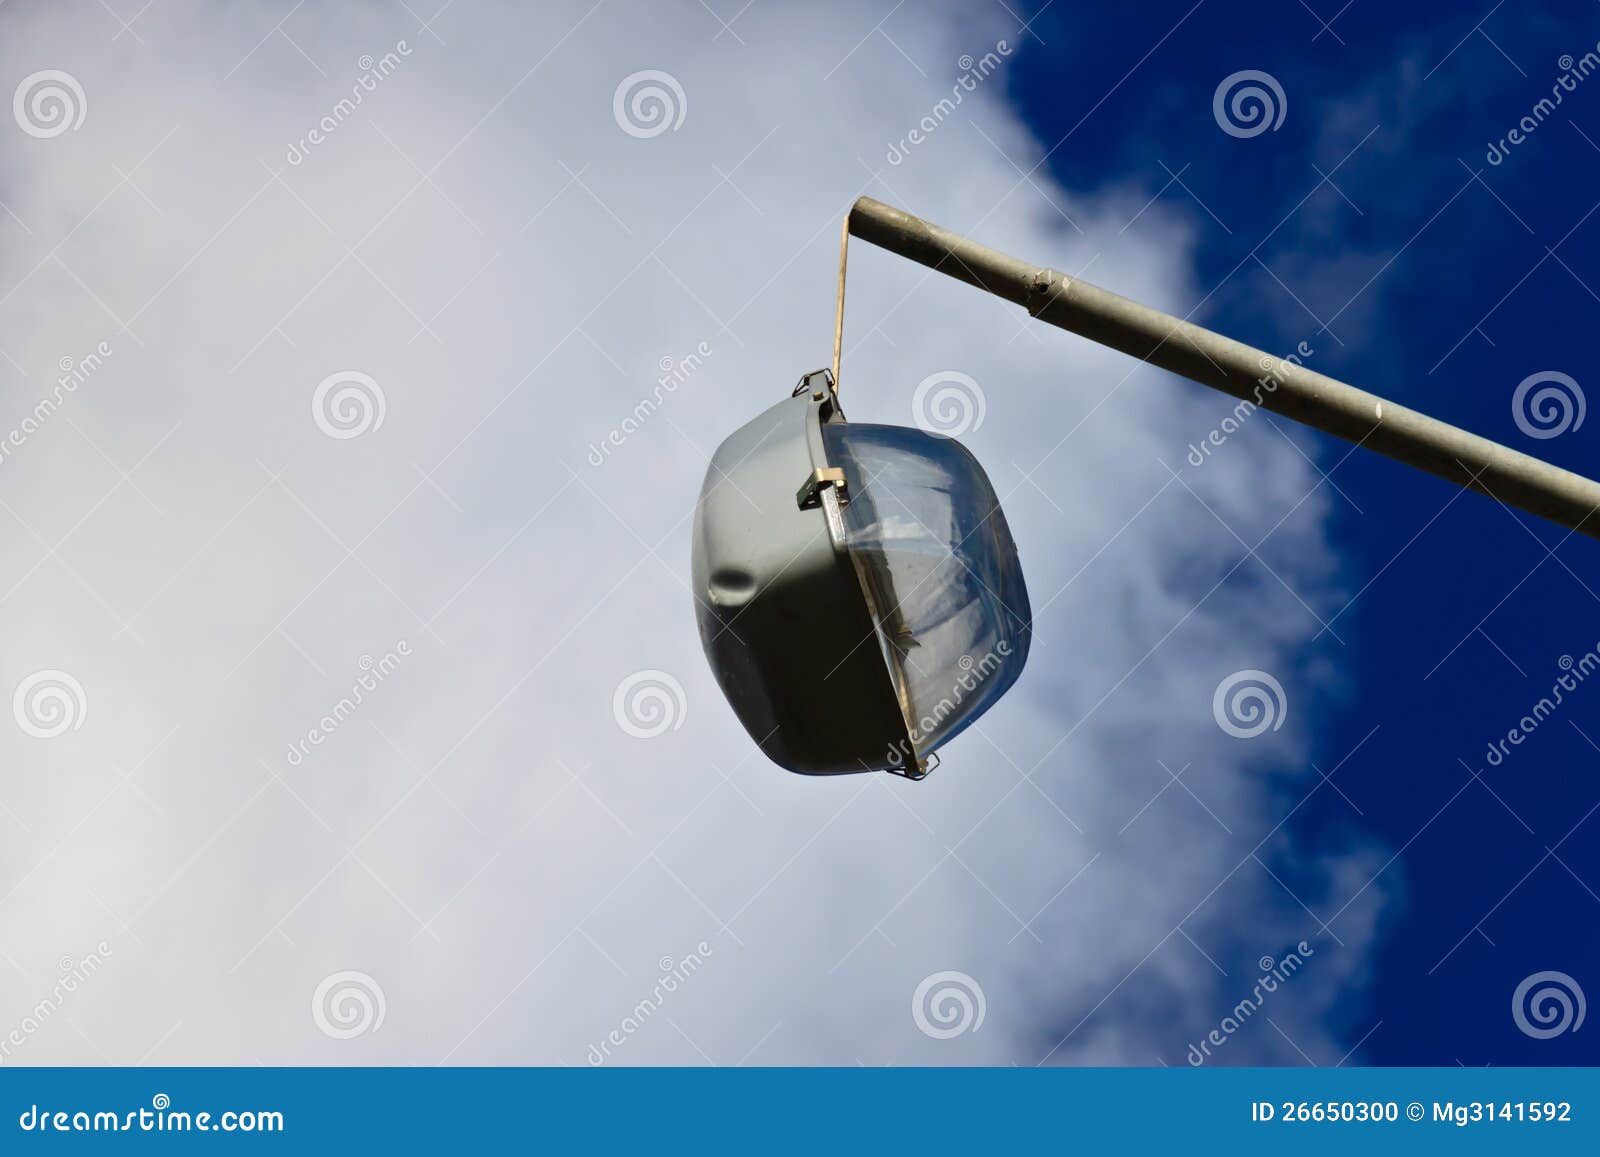 A broken street light stock photo. Image of lighting - 26650300